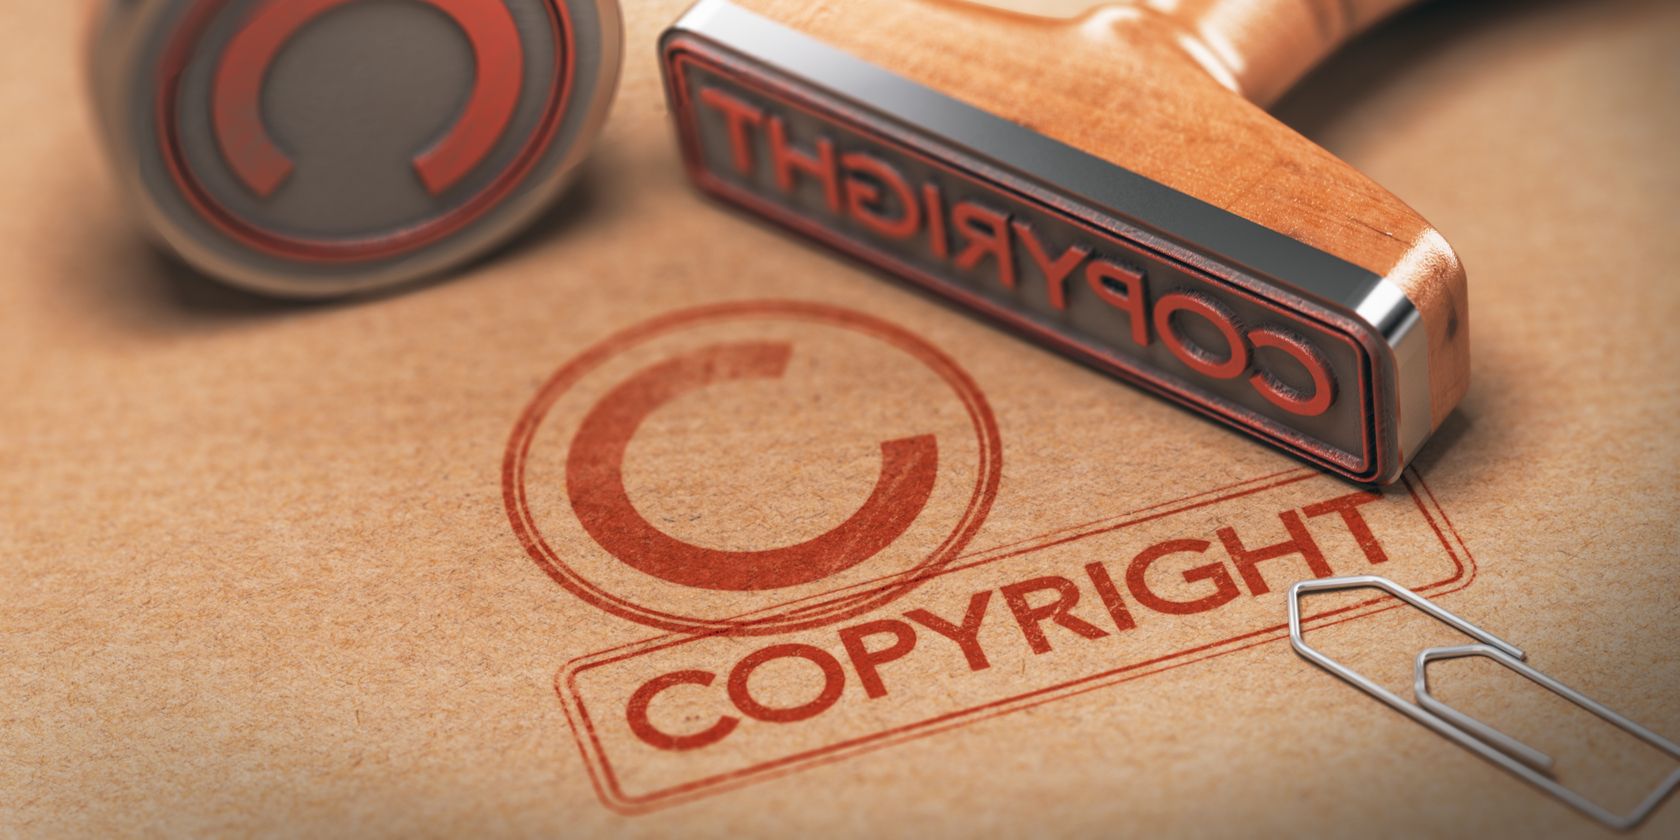 A copyright stamp